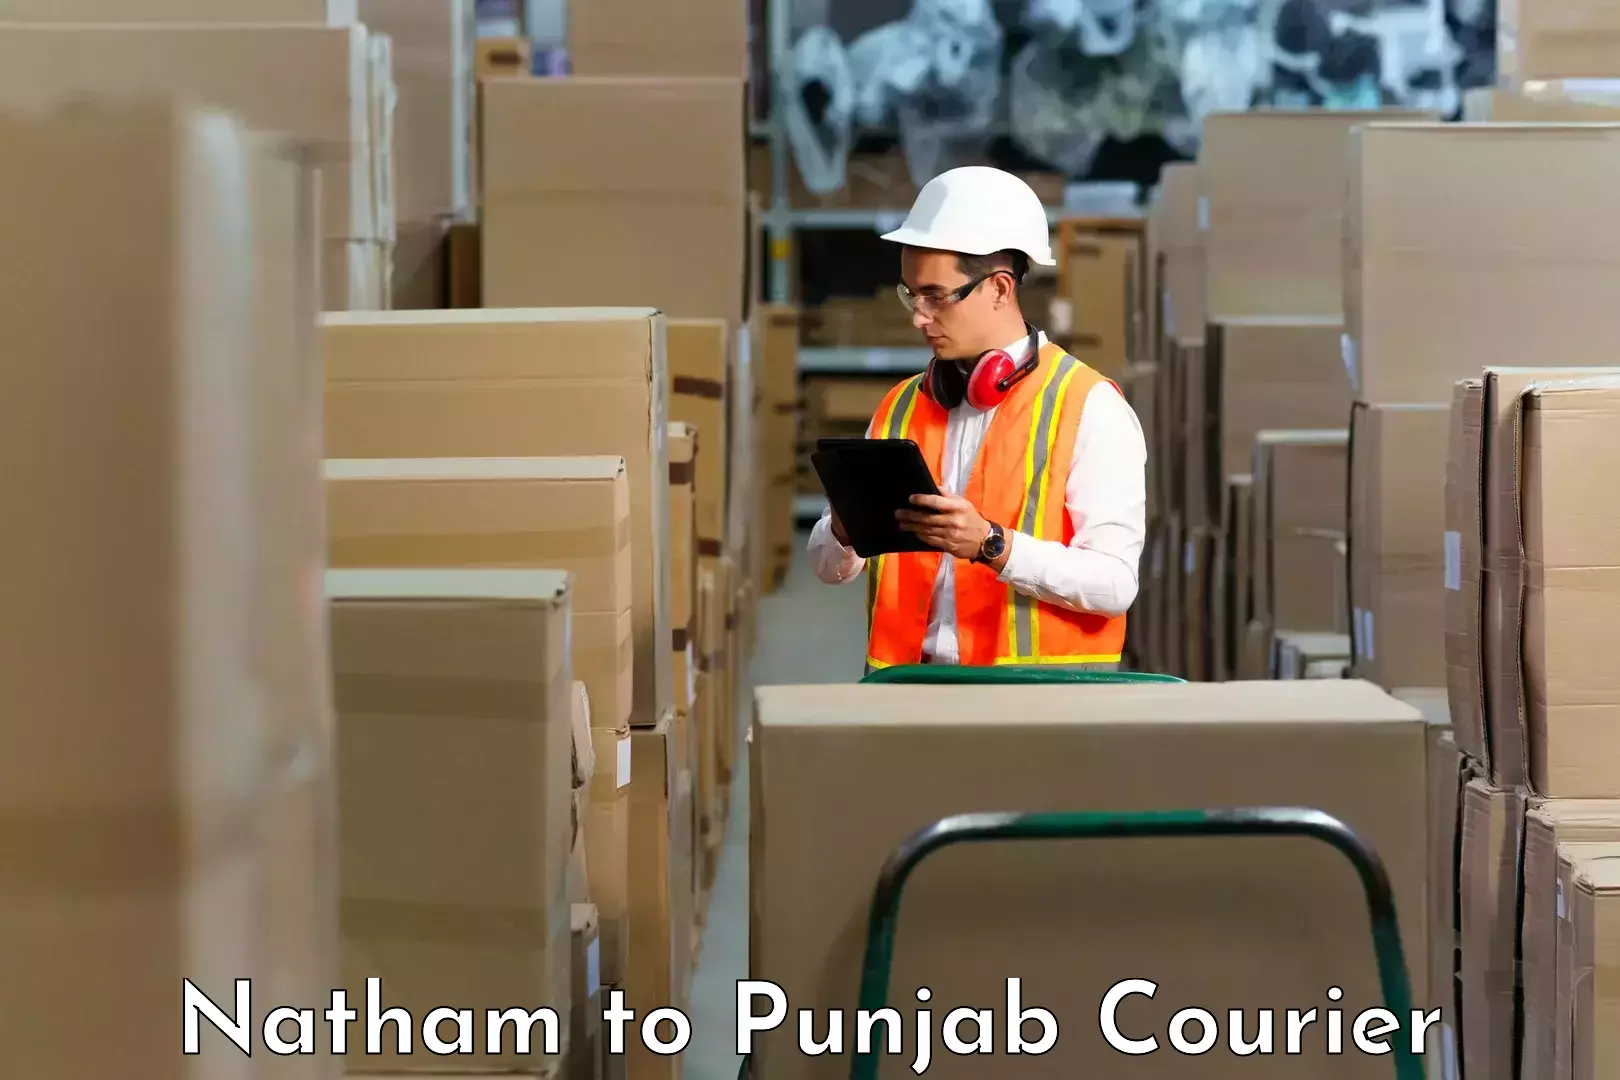 Cash on delivery service Natham to Central University of Punjab Bathinda